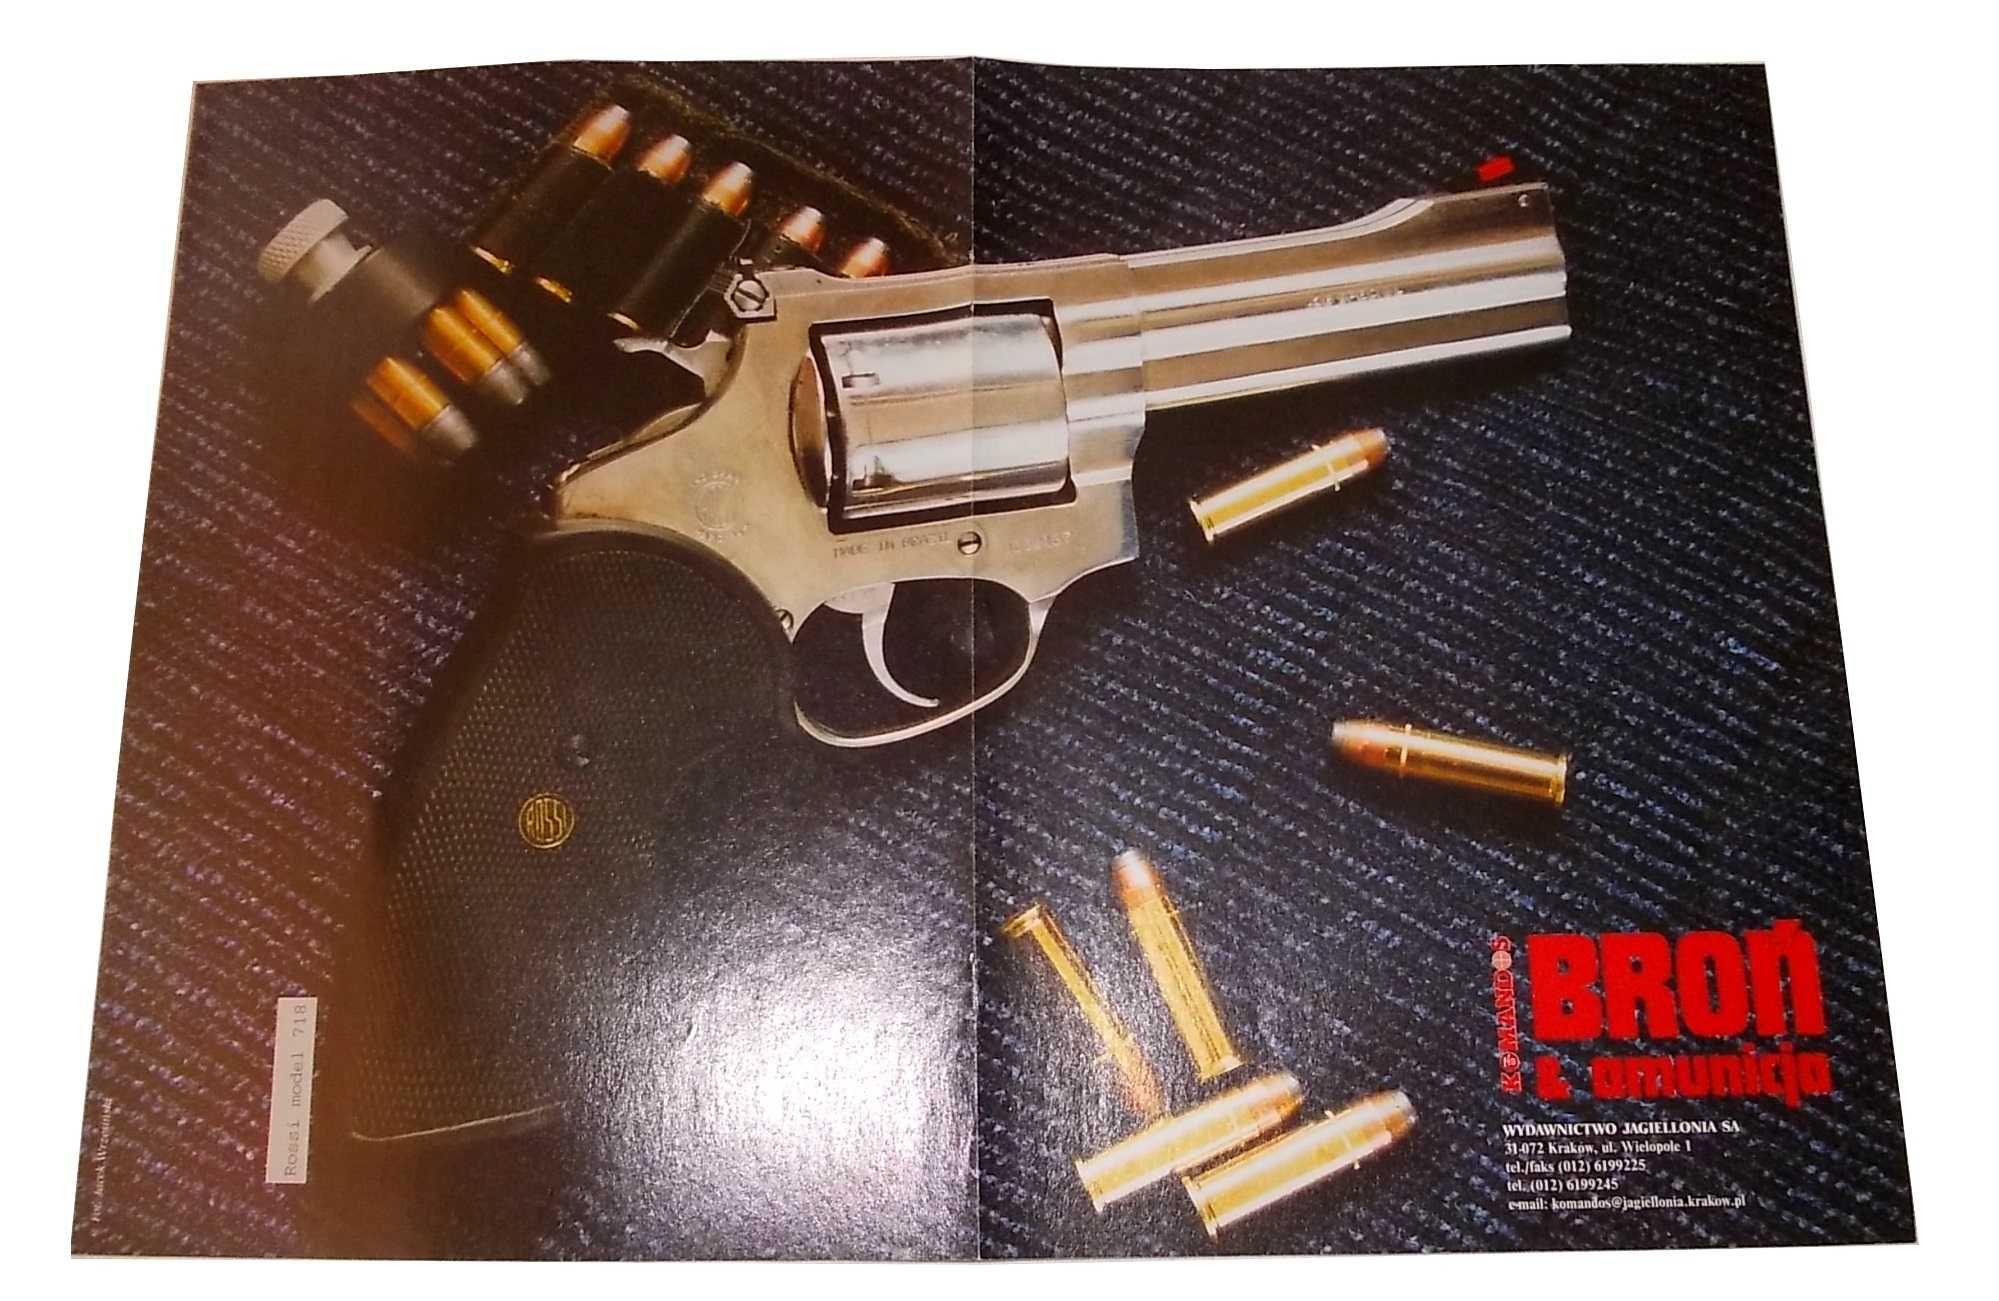 Vintage - plakat dwustronny (czasopismo KOMANDOS) - Colt, M16 - 2002r.